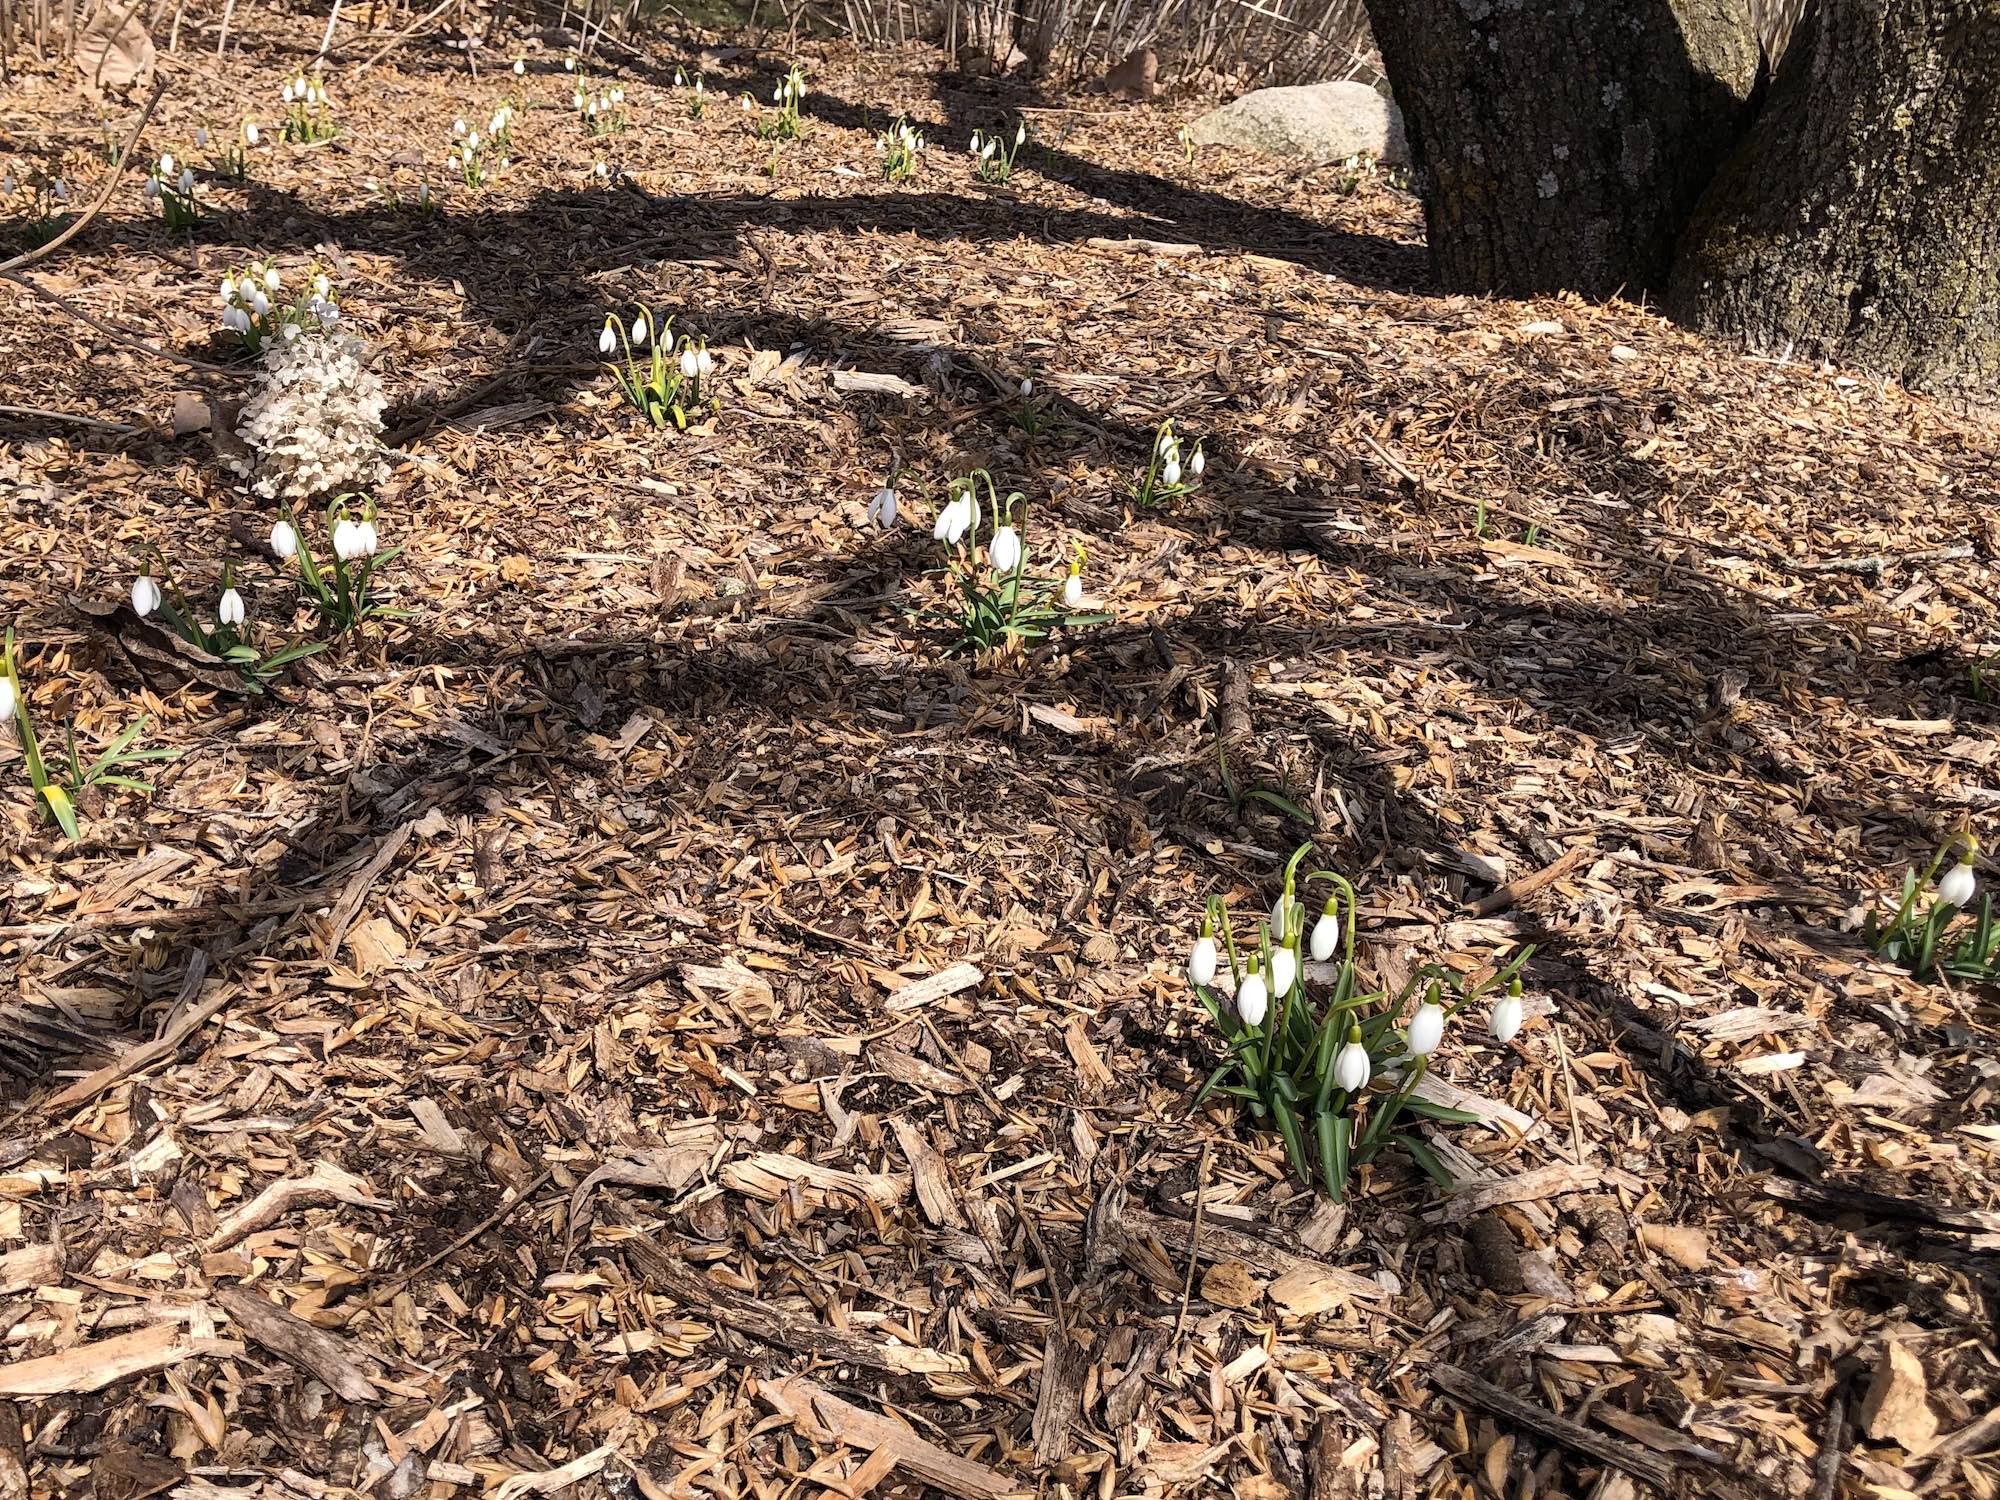 Snowdrops in UW Arboretum at edge of Longenecker Gardens in Madison, Wisconsin on March 26, 2019.